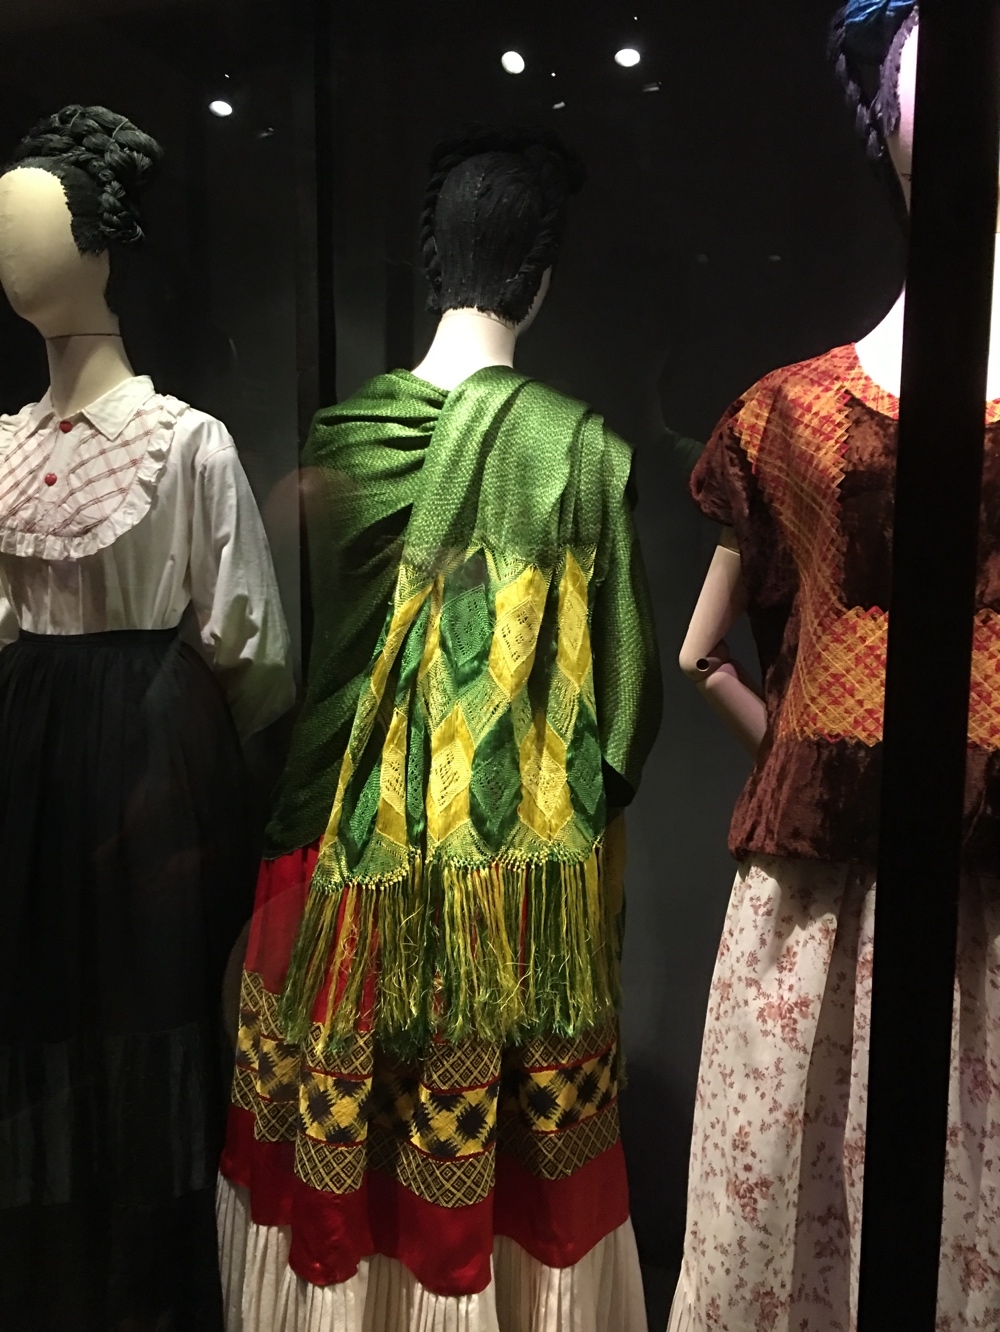 3 Frida Kahlo dresses from rear